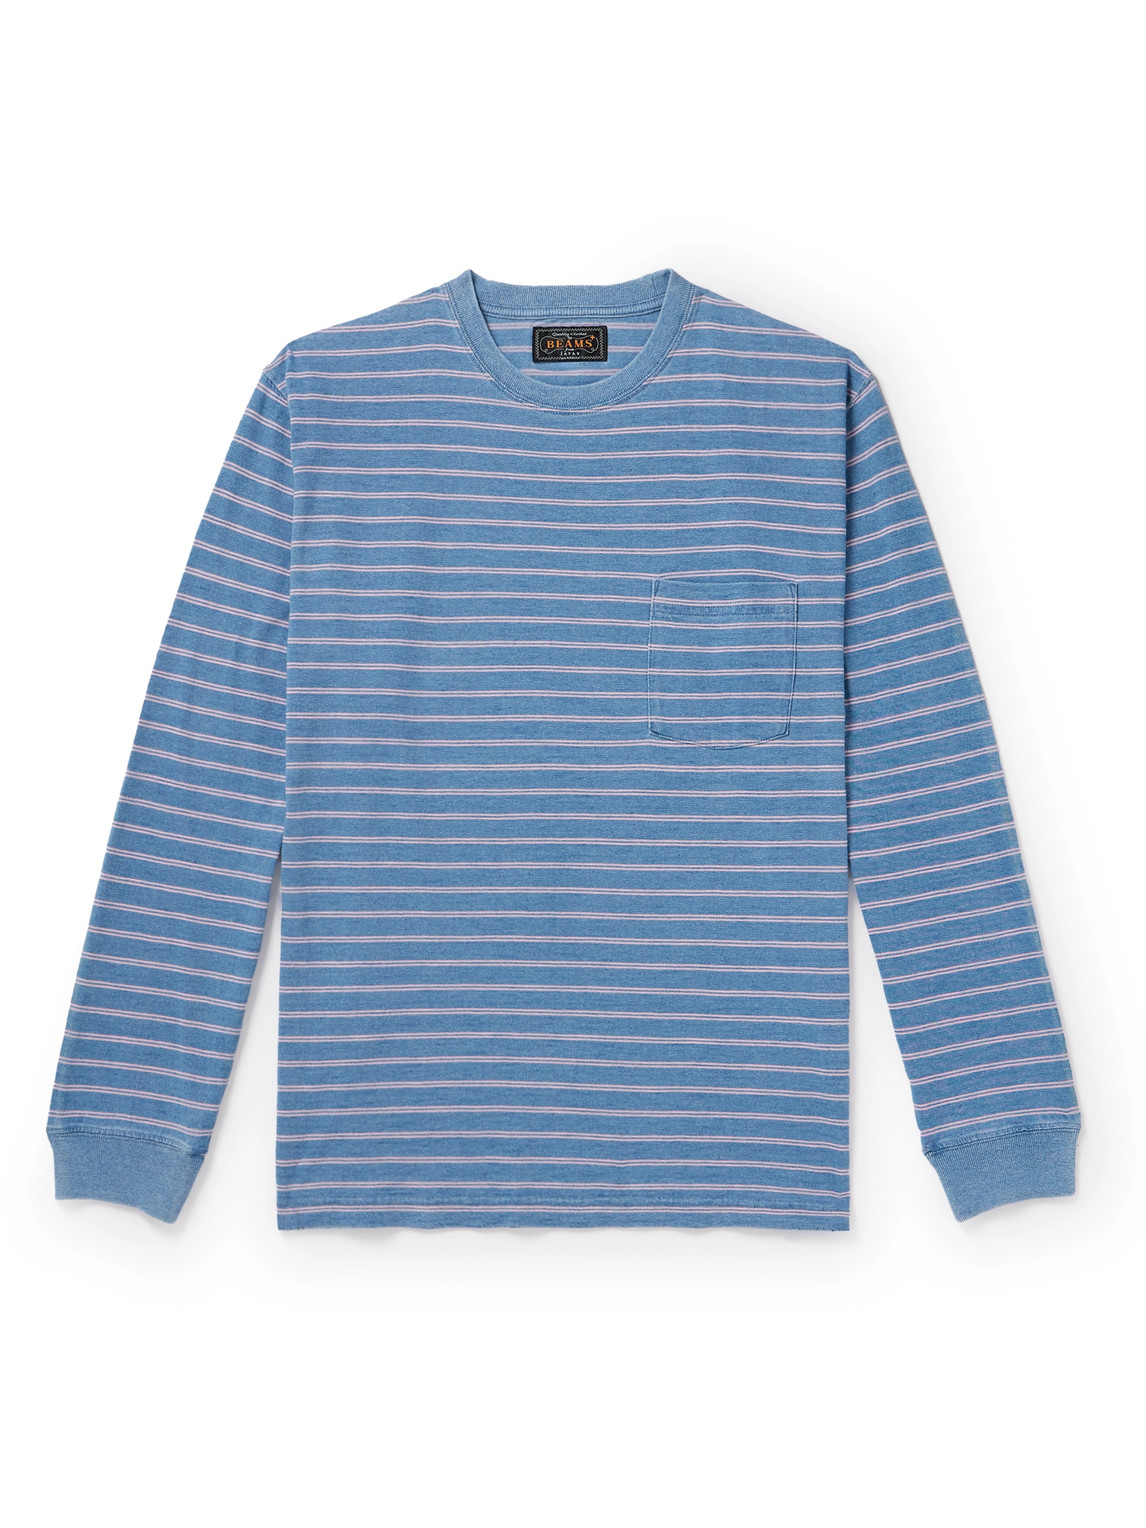 Beams Indigo Striped Cotton-jersey T-shirt In Blue